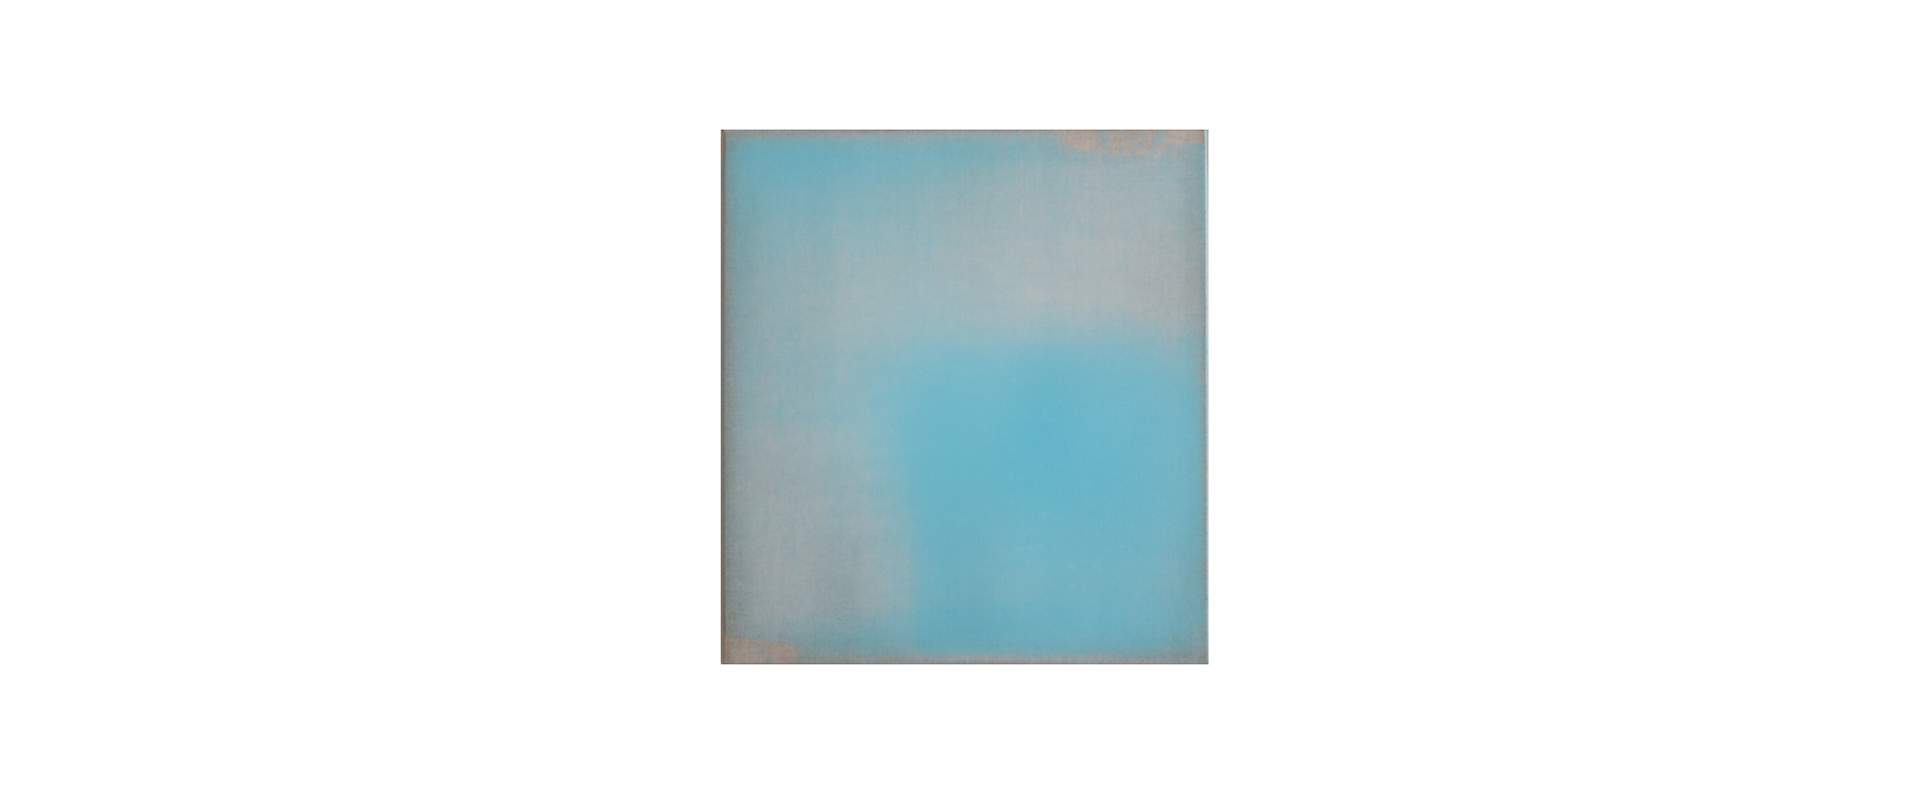 Jus Juchtmans, 20200516 – 2020, Acryl auf Leinwand, 50 x 45 cm